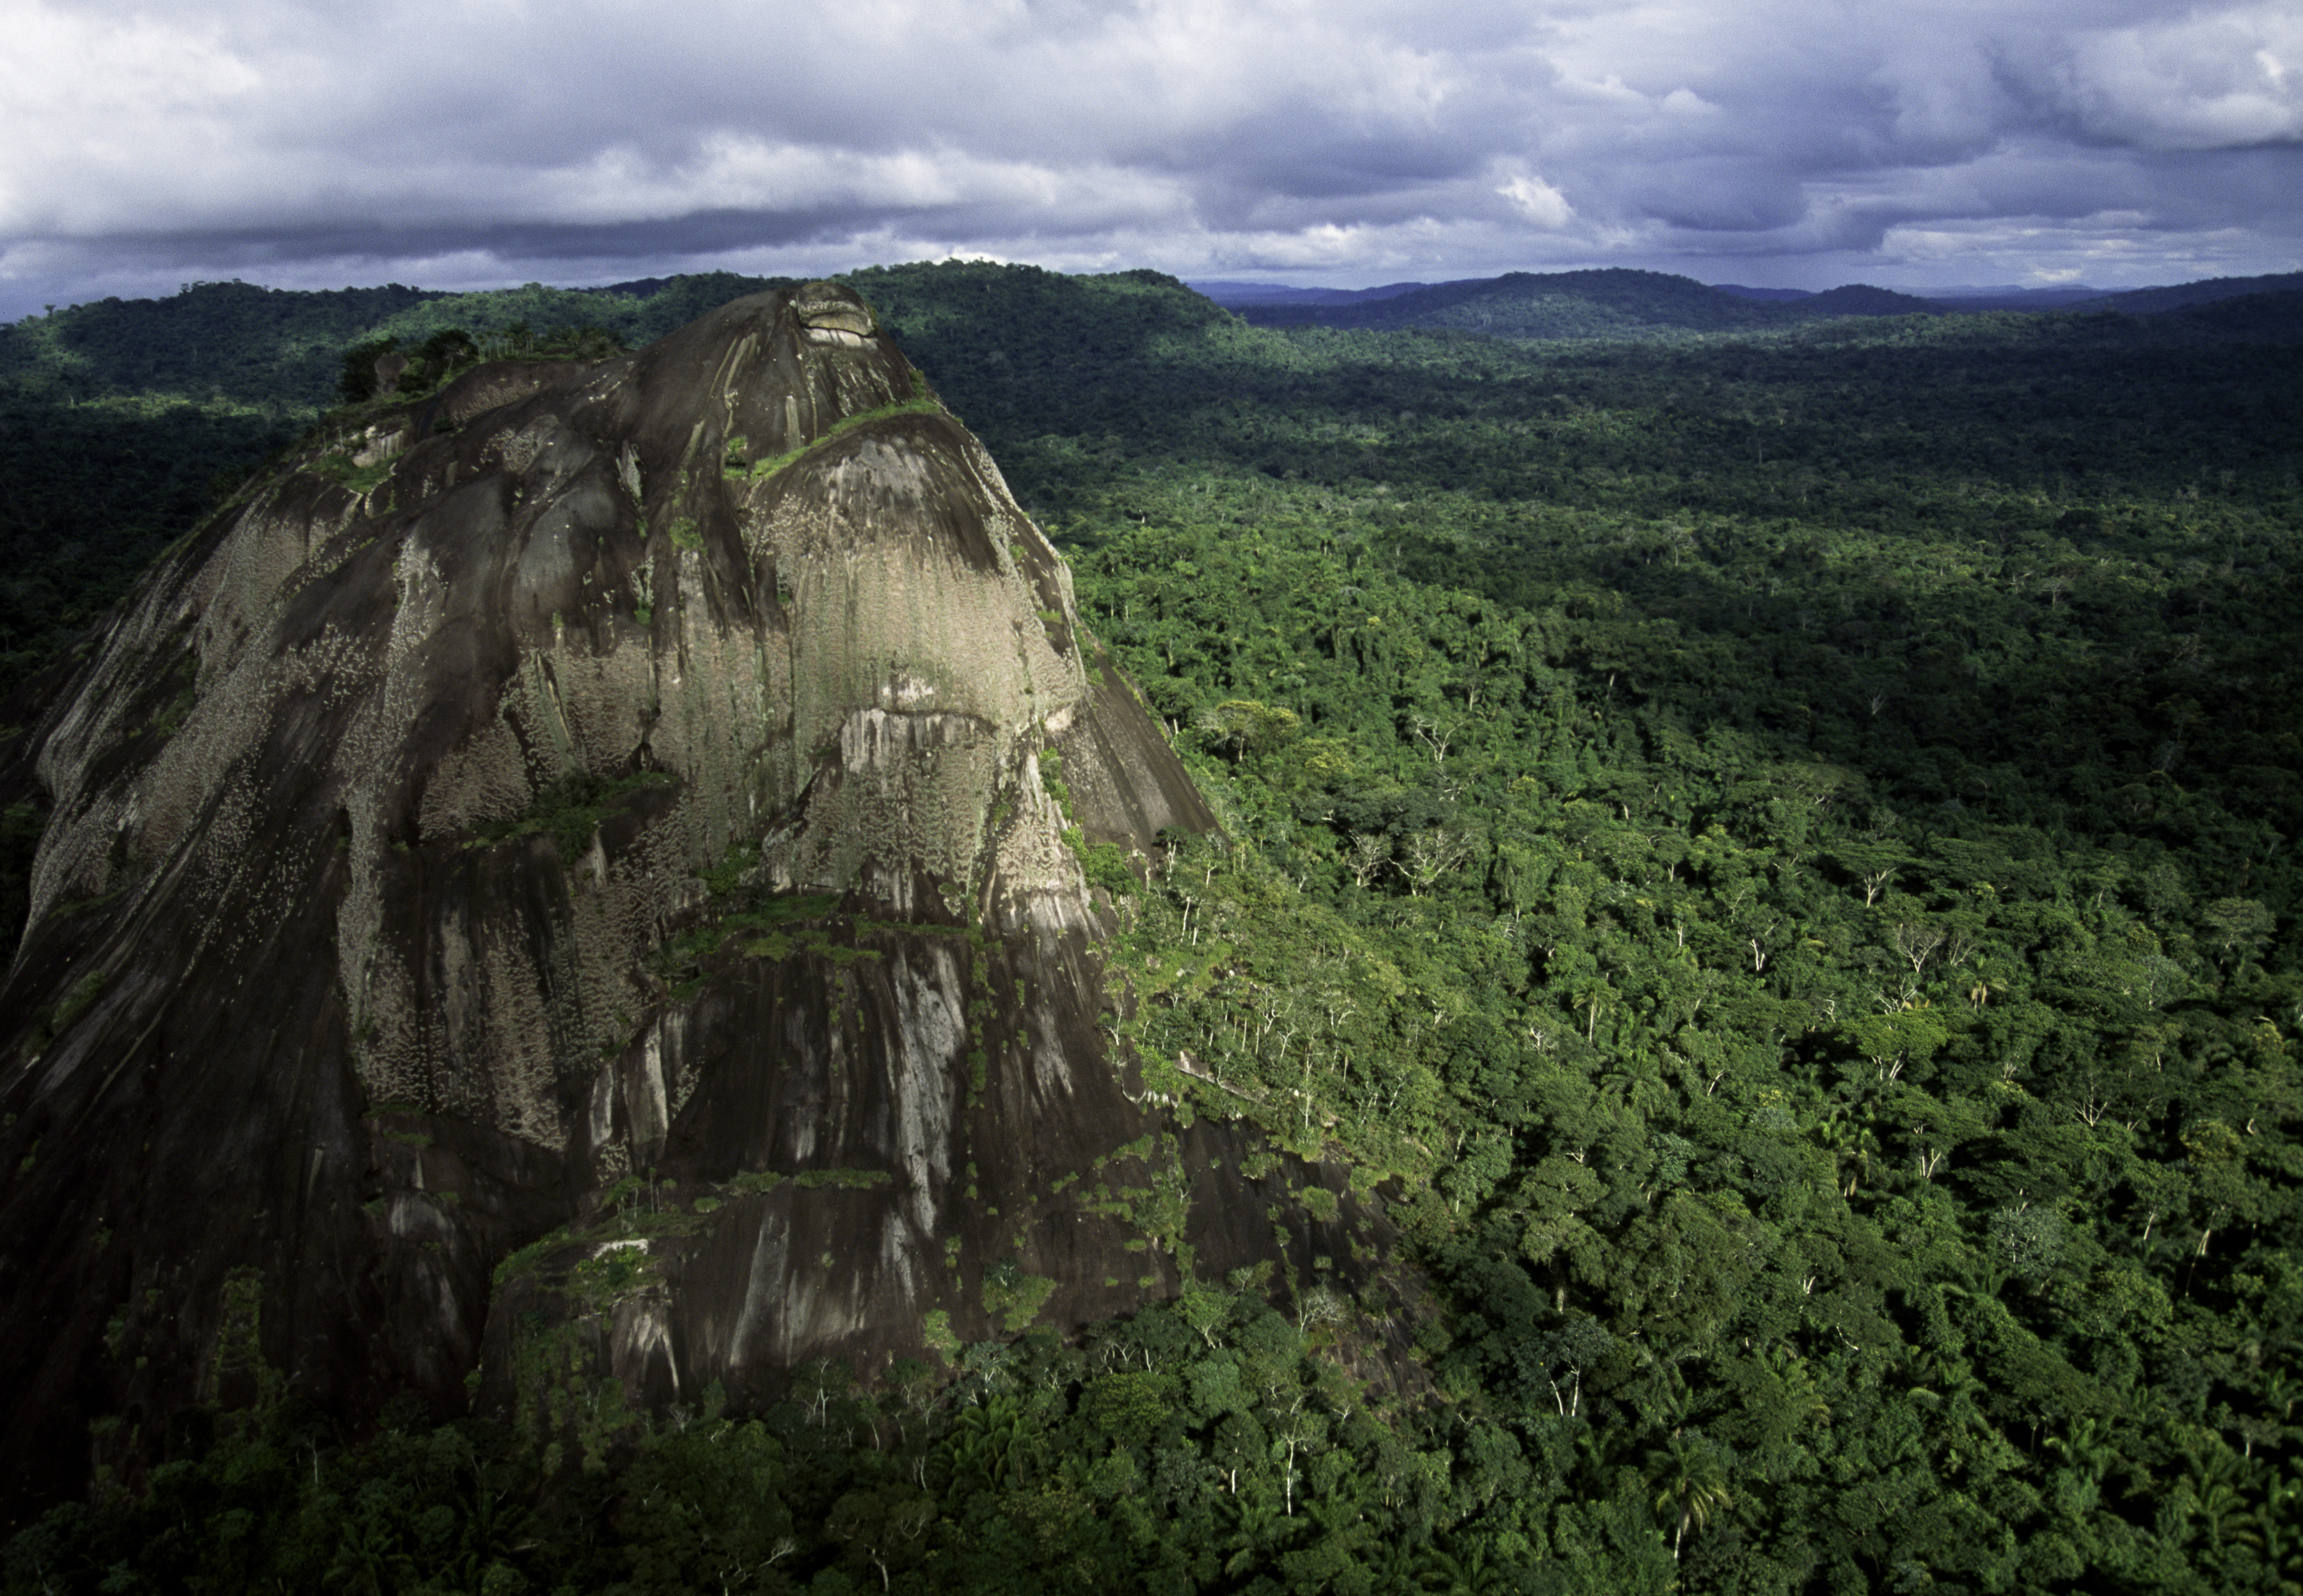 Amazon rainforest by Haroldo Castro - Earth Day - PicsArt Blog